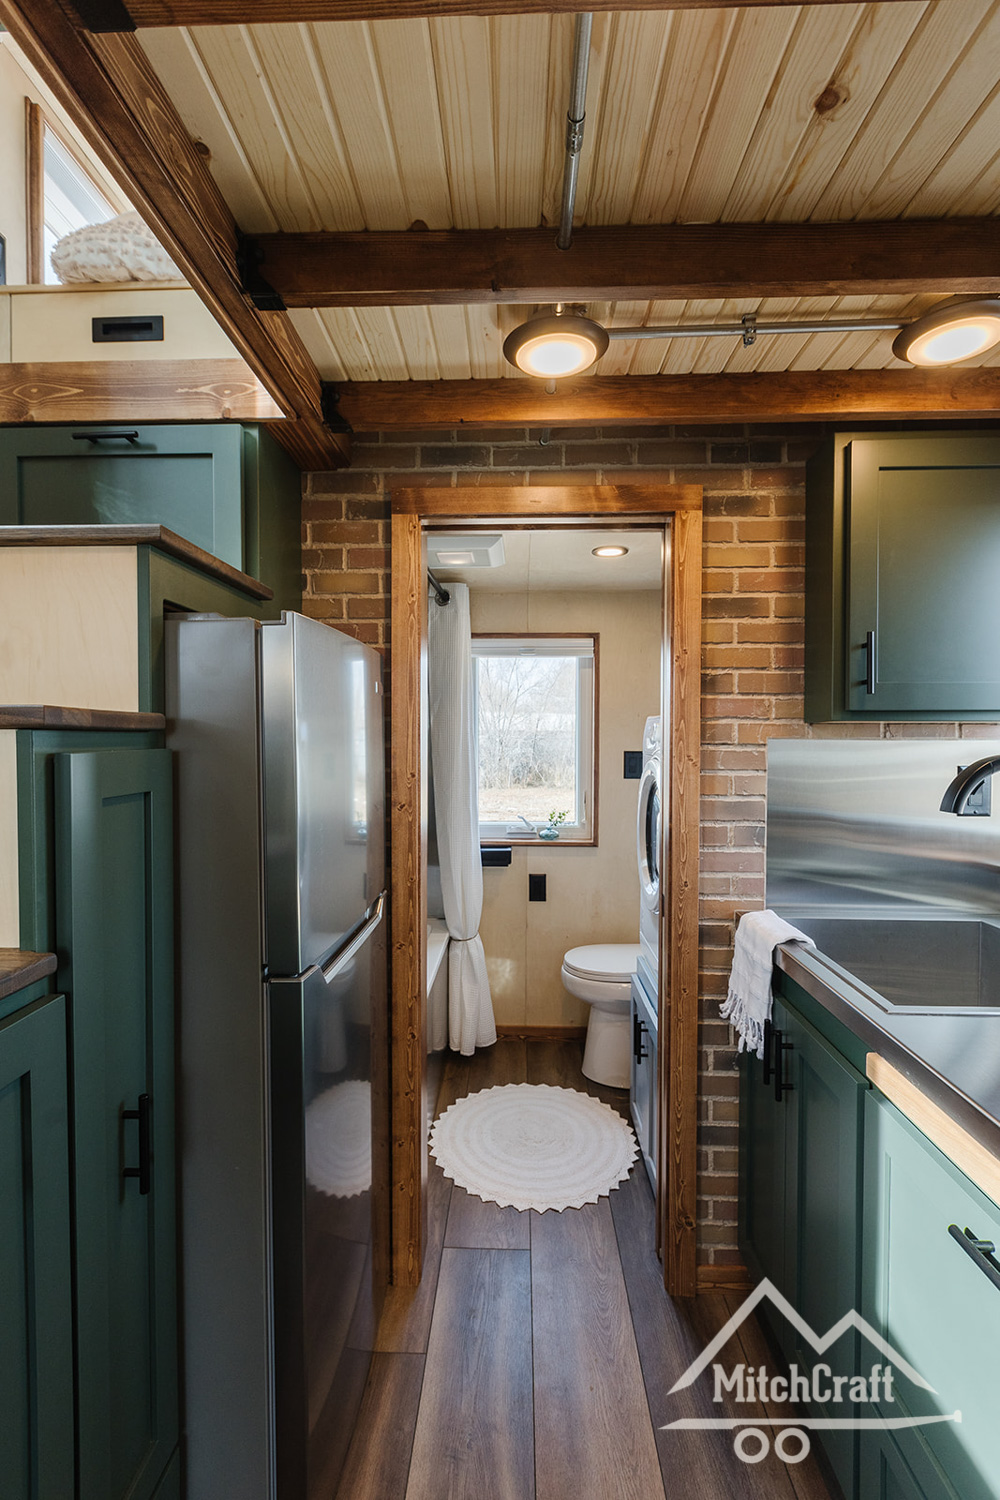 Kitchen & Bathroom - Nicole's 16x8' Tiny House by MitchCraft Tiny Homes